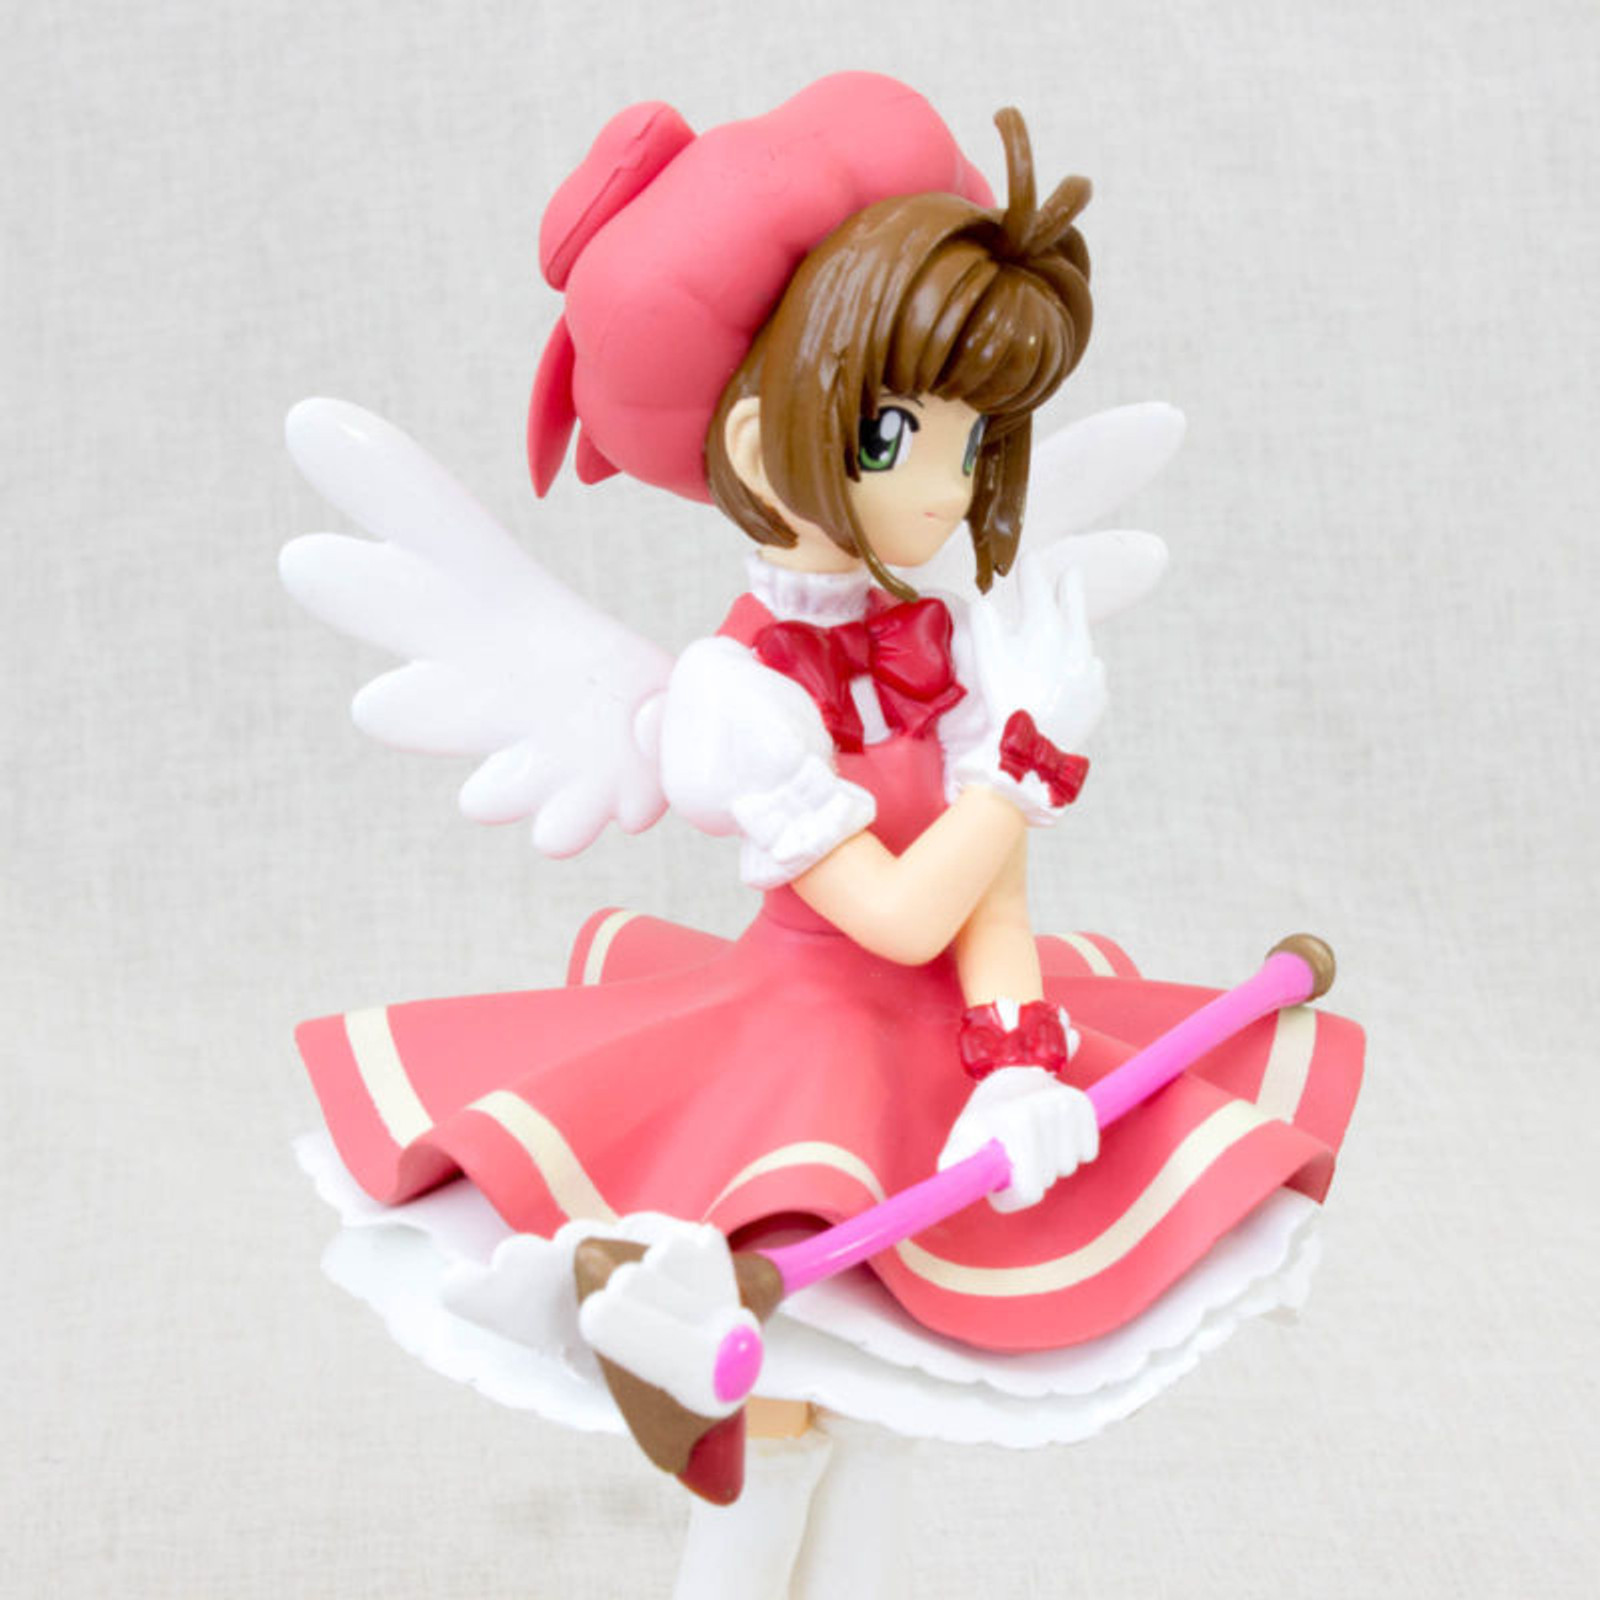 CardCaptor Sakura Cute Memory Collection Figure CLAMP Bandai Limited JAPAN ANIME